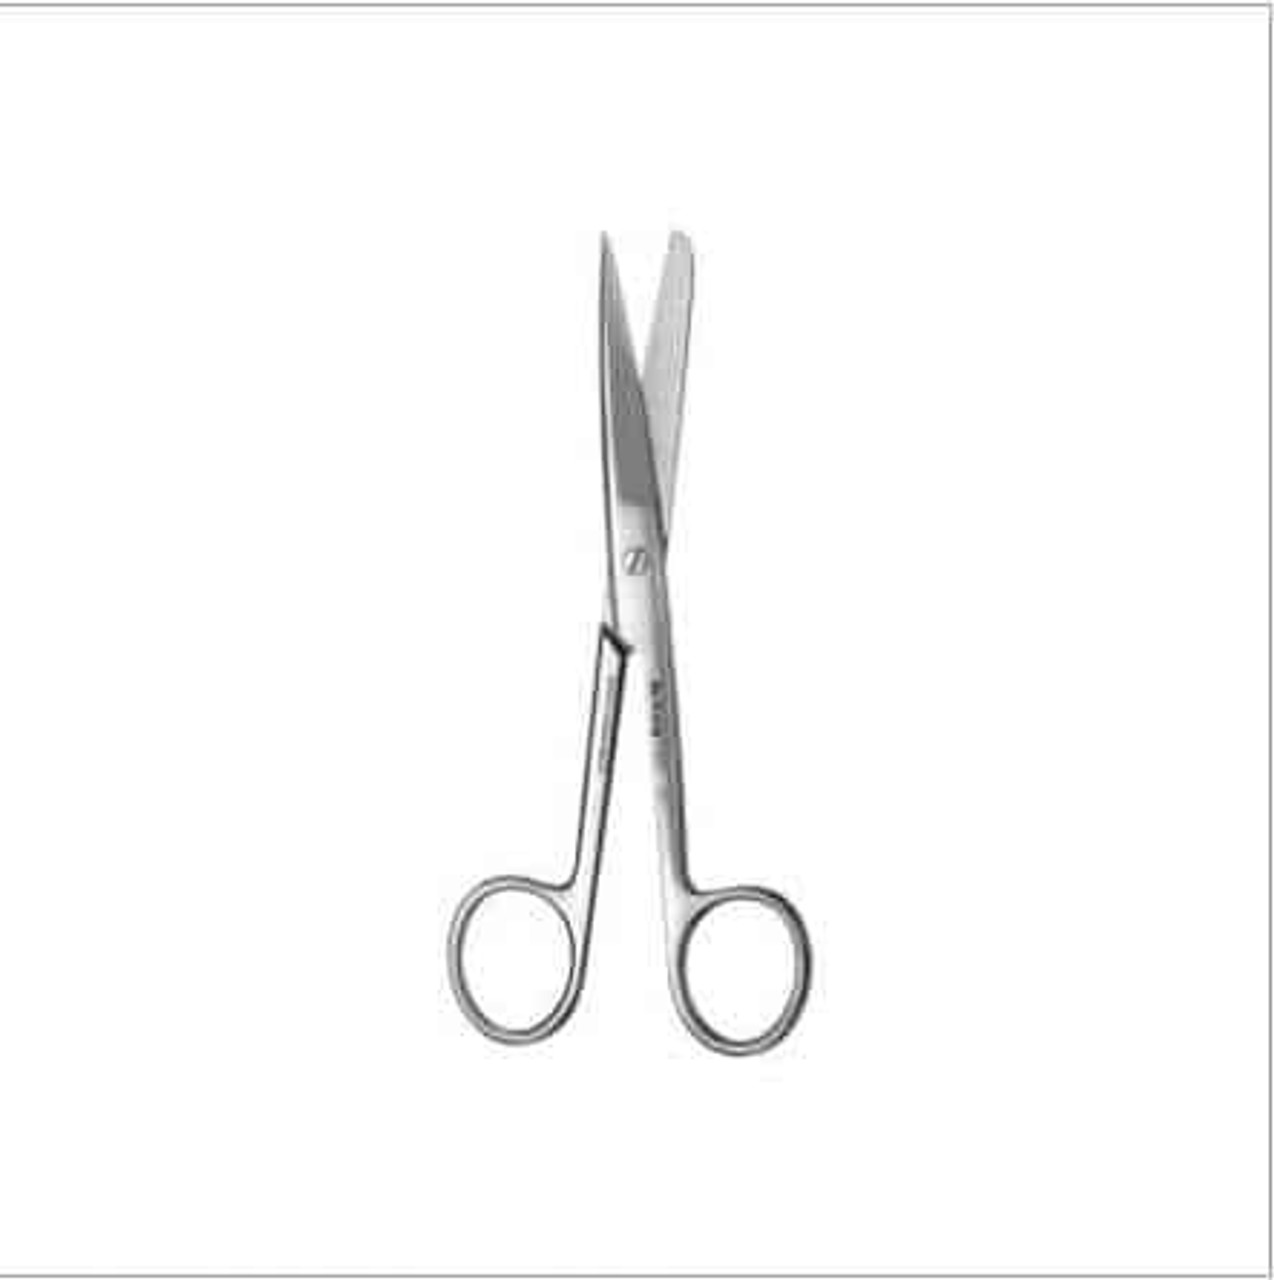 Hu-Friedy - Surgical Scissors - 22 B/Straight